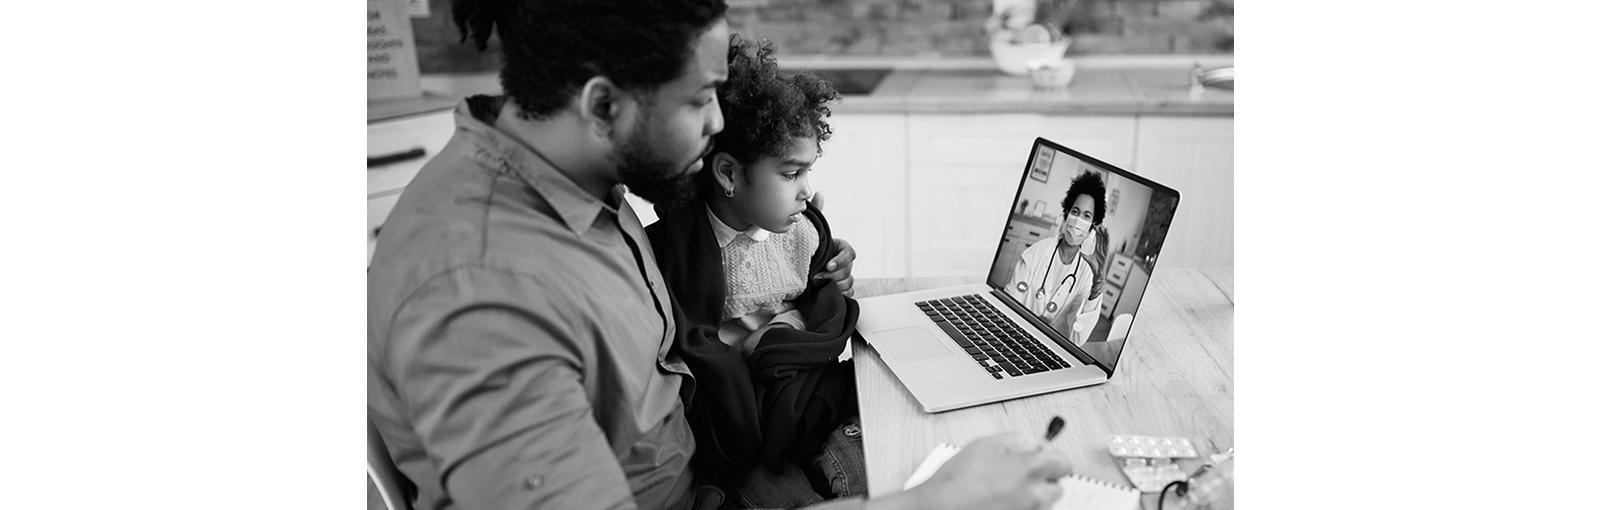 Man holding daughter while looking at laptop